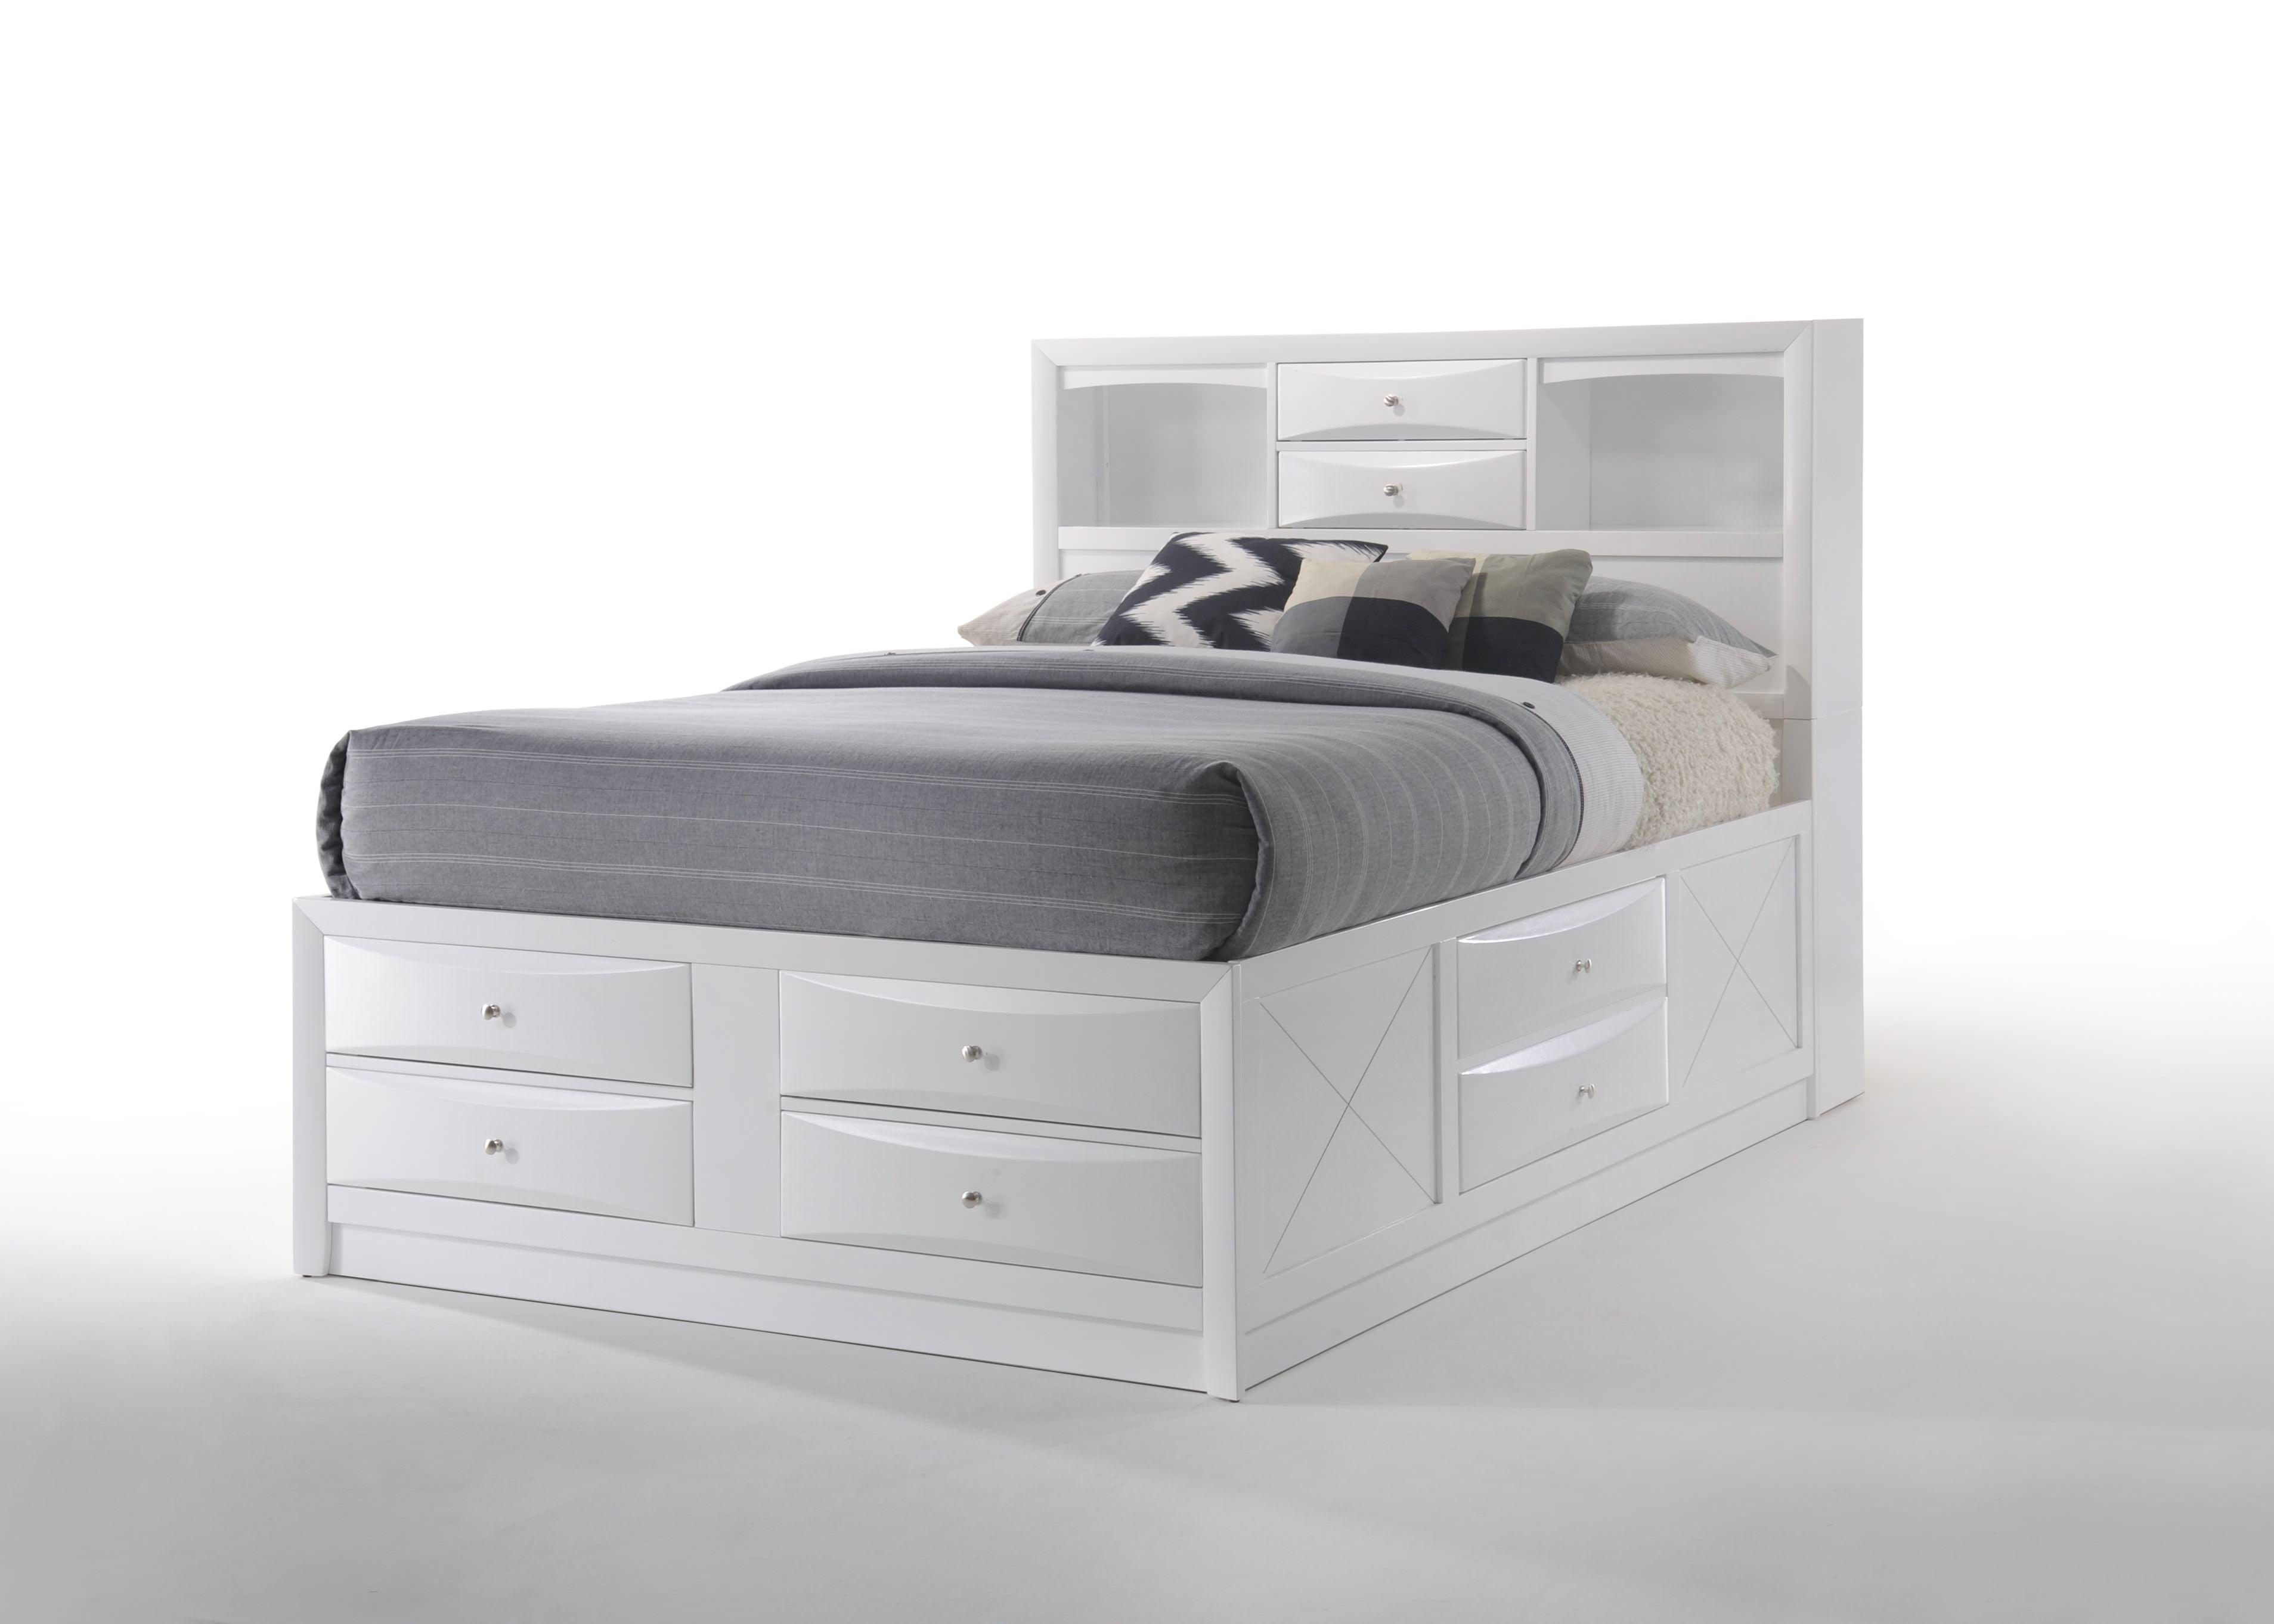 Elegant Full-Size White Wood Frame Storage Bed with Bookcase Headboard